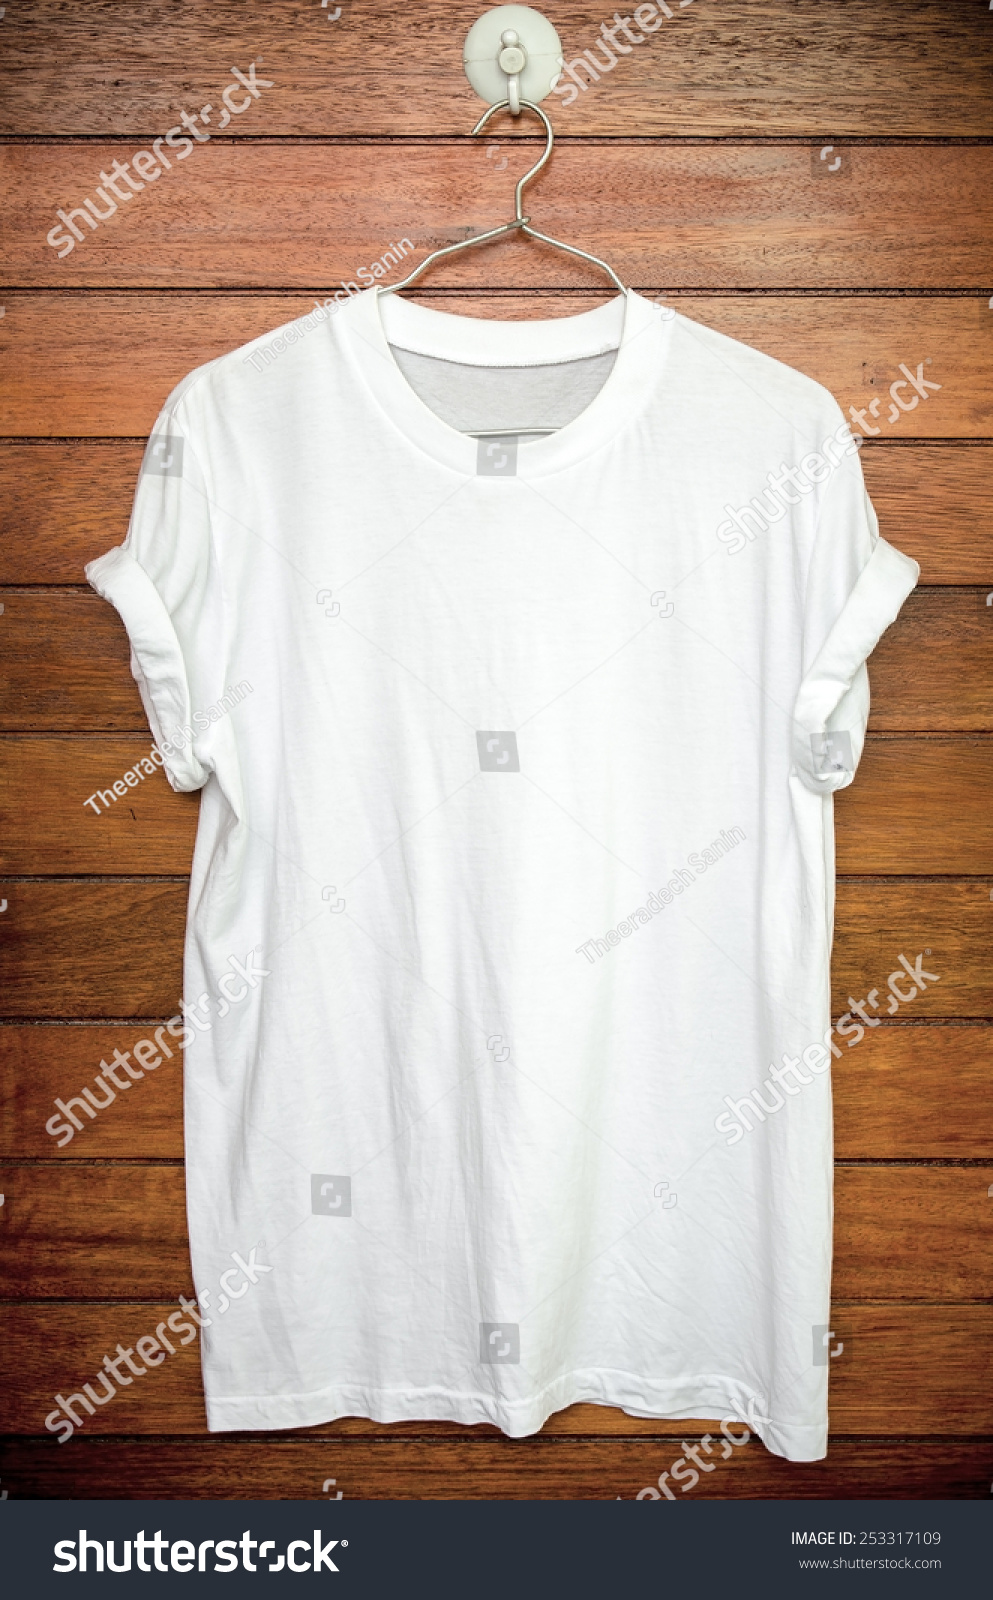 White T-Shirt Hang On Wood Wall. Stock Photo 253317109 : Shutterstock